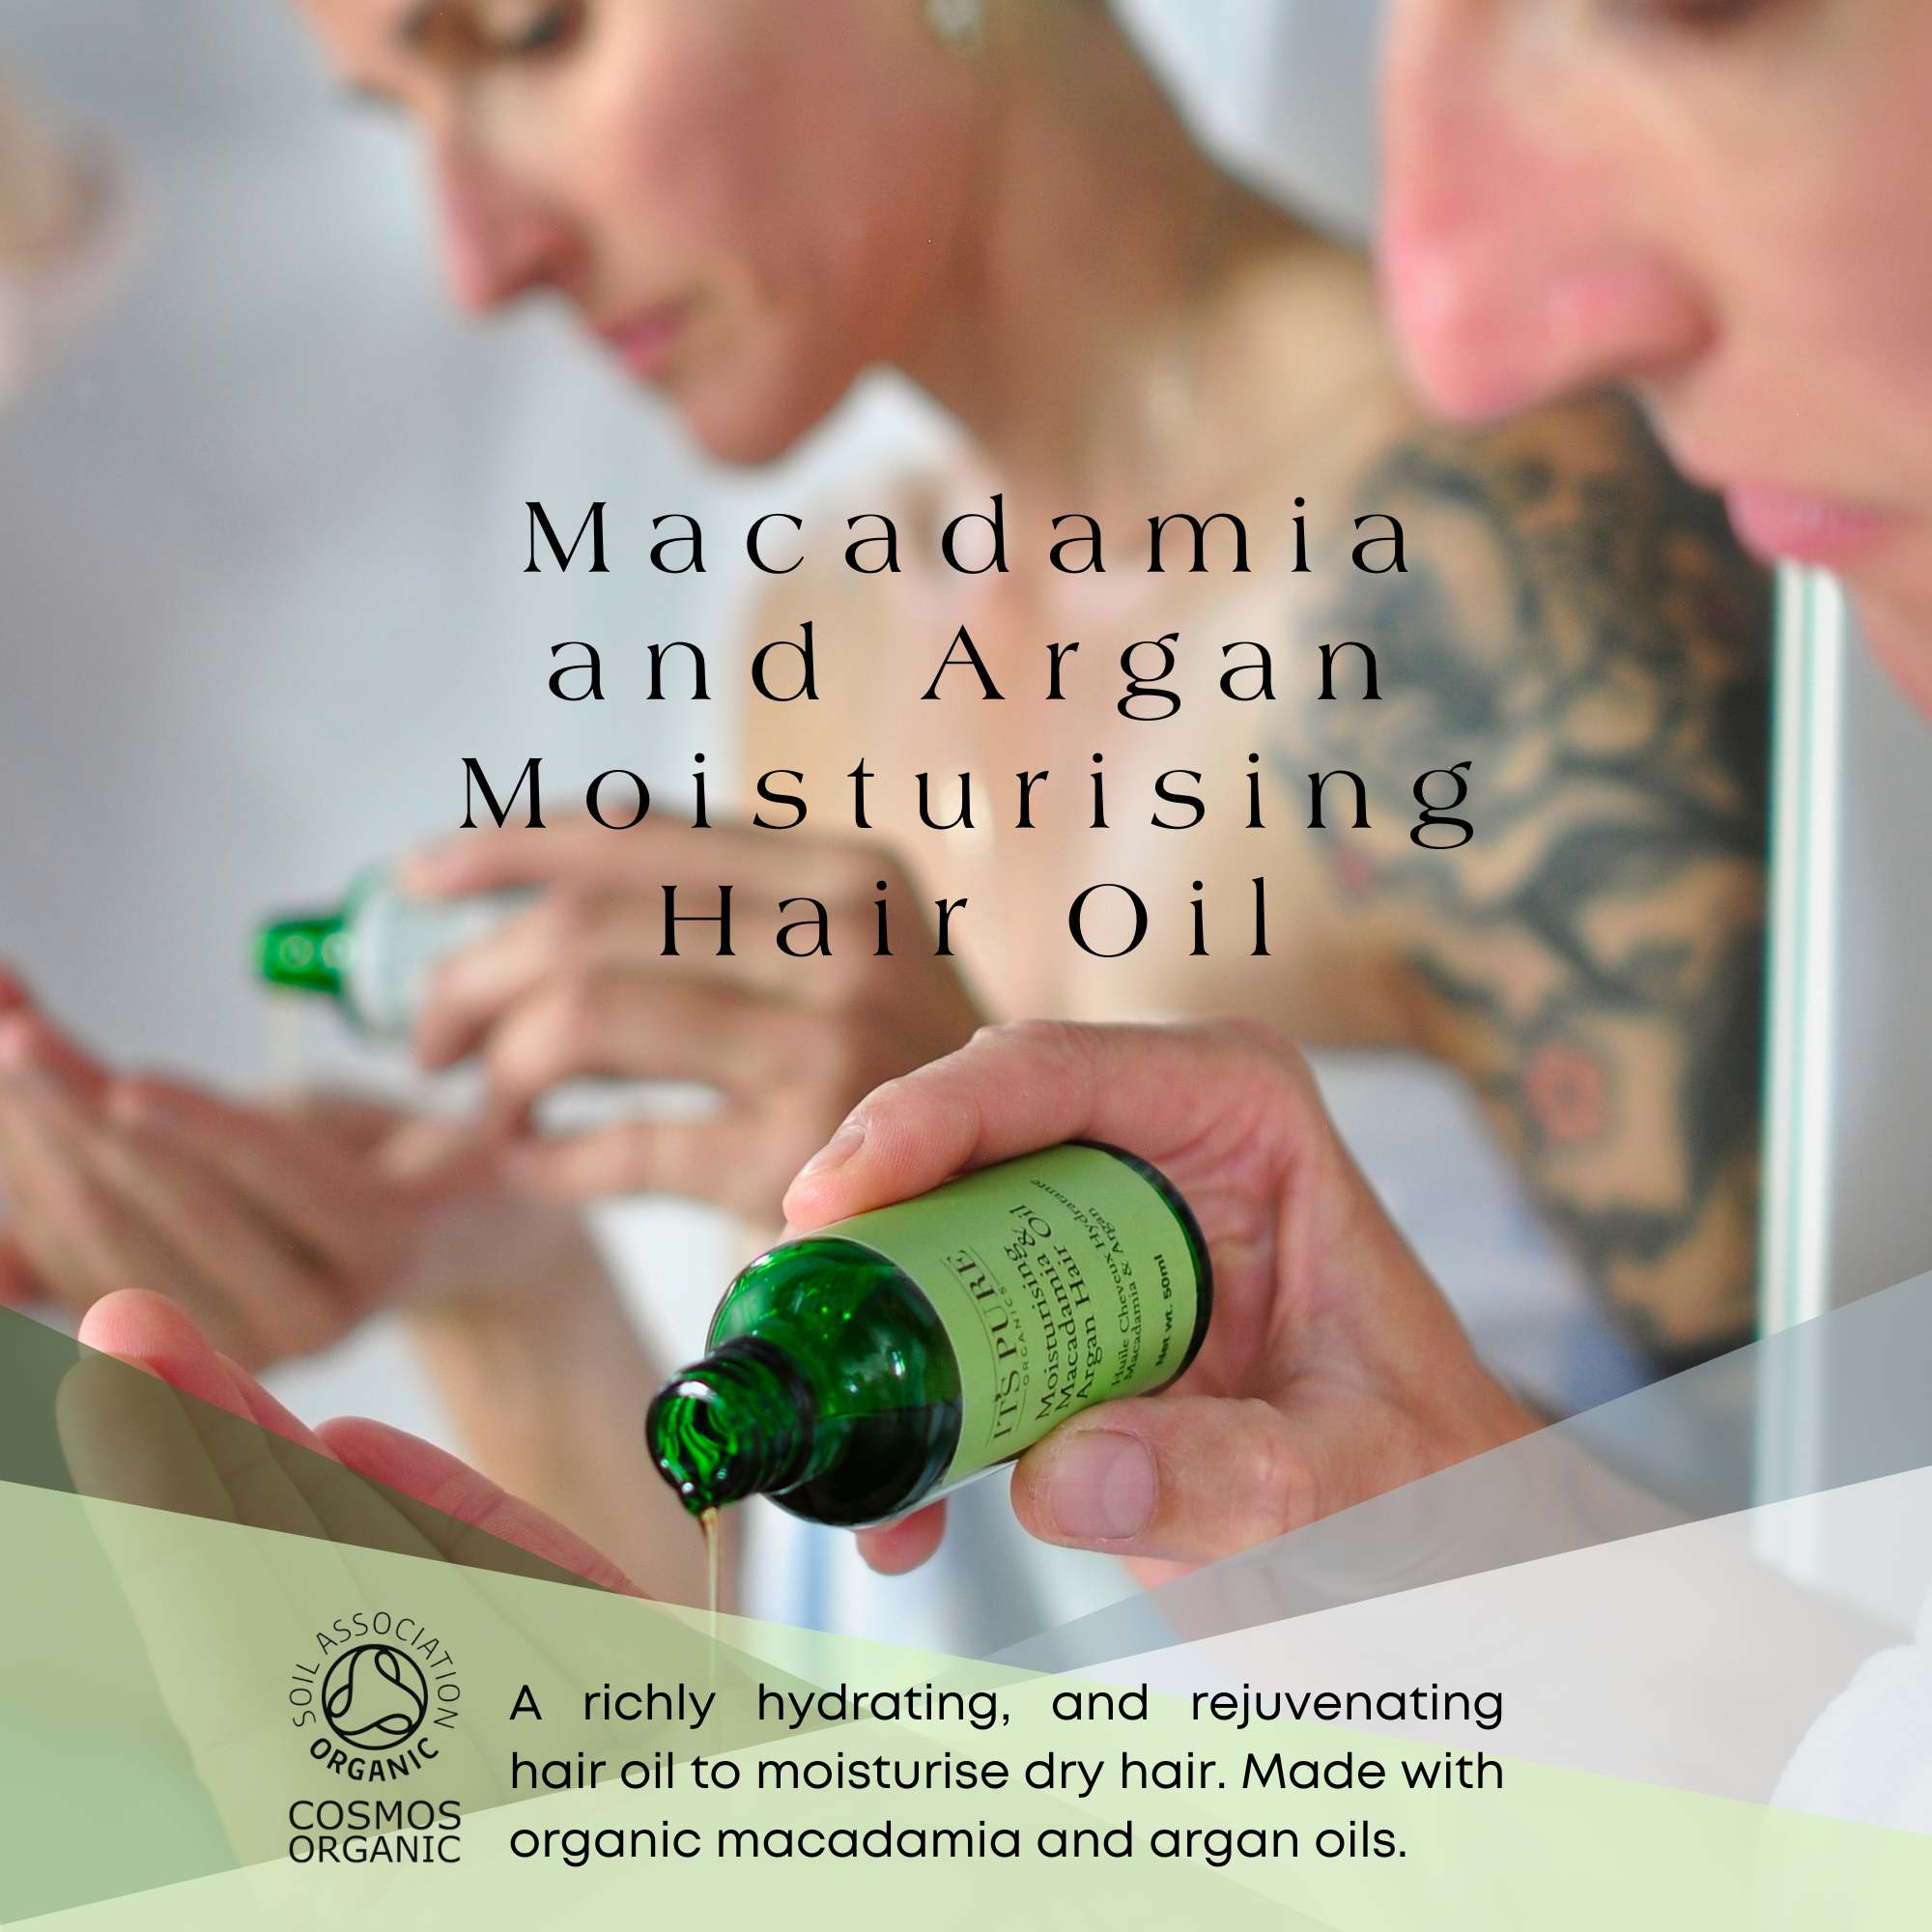 It's Pure Macadamia and Argan Moisturising Hair Oil